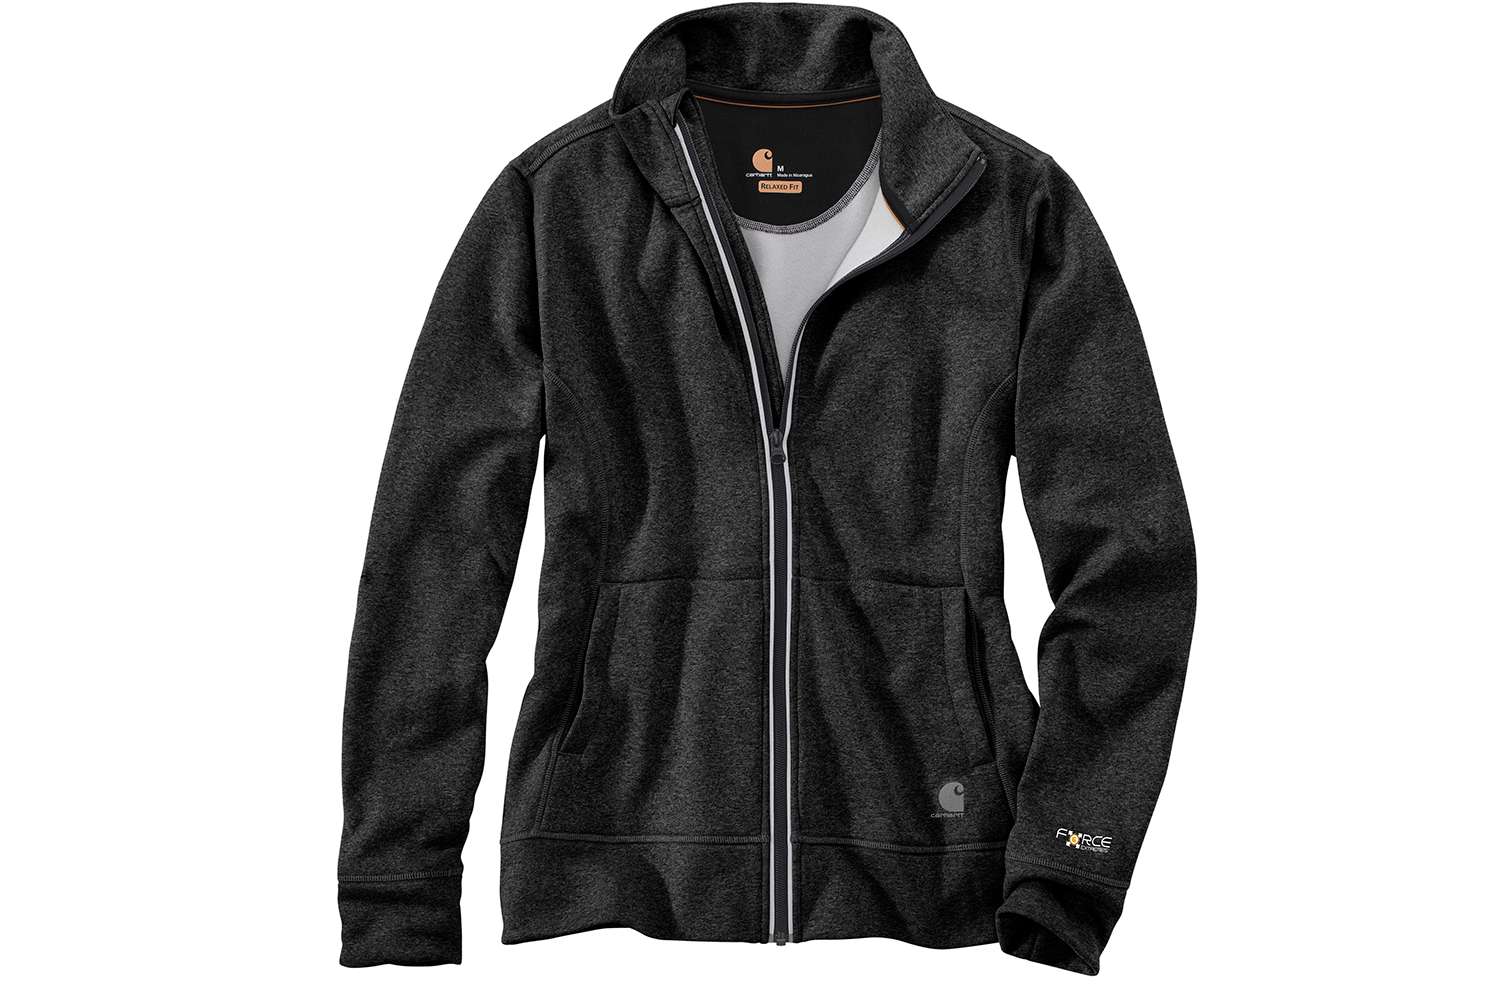 Carhartt Force Extremes Zip Front Sweatshirt, $59.99